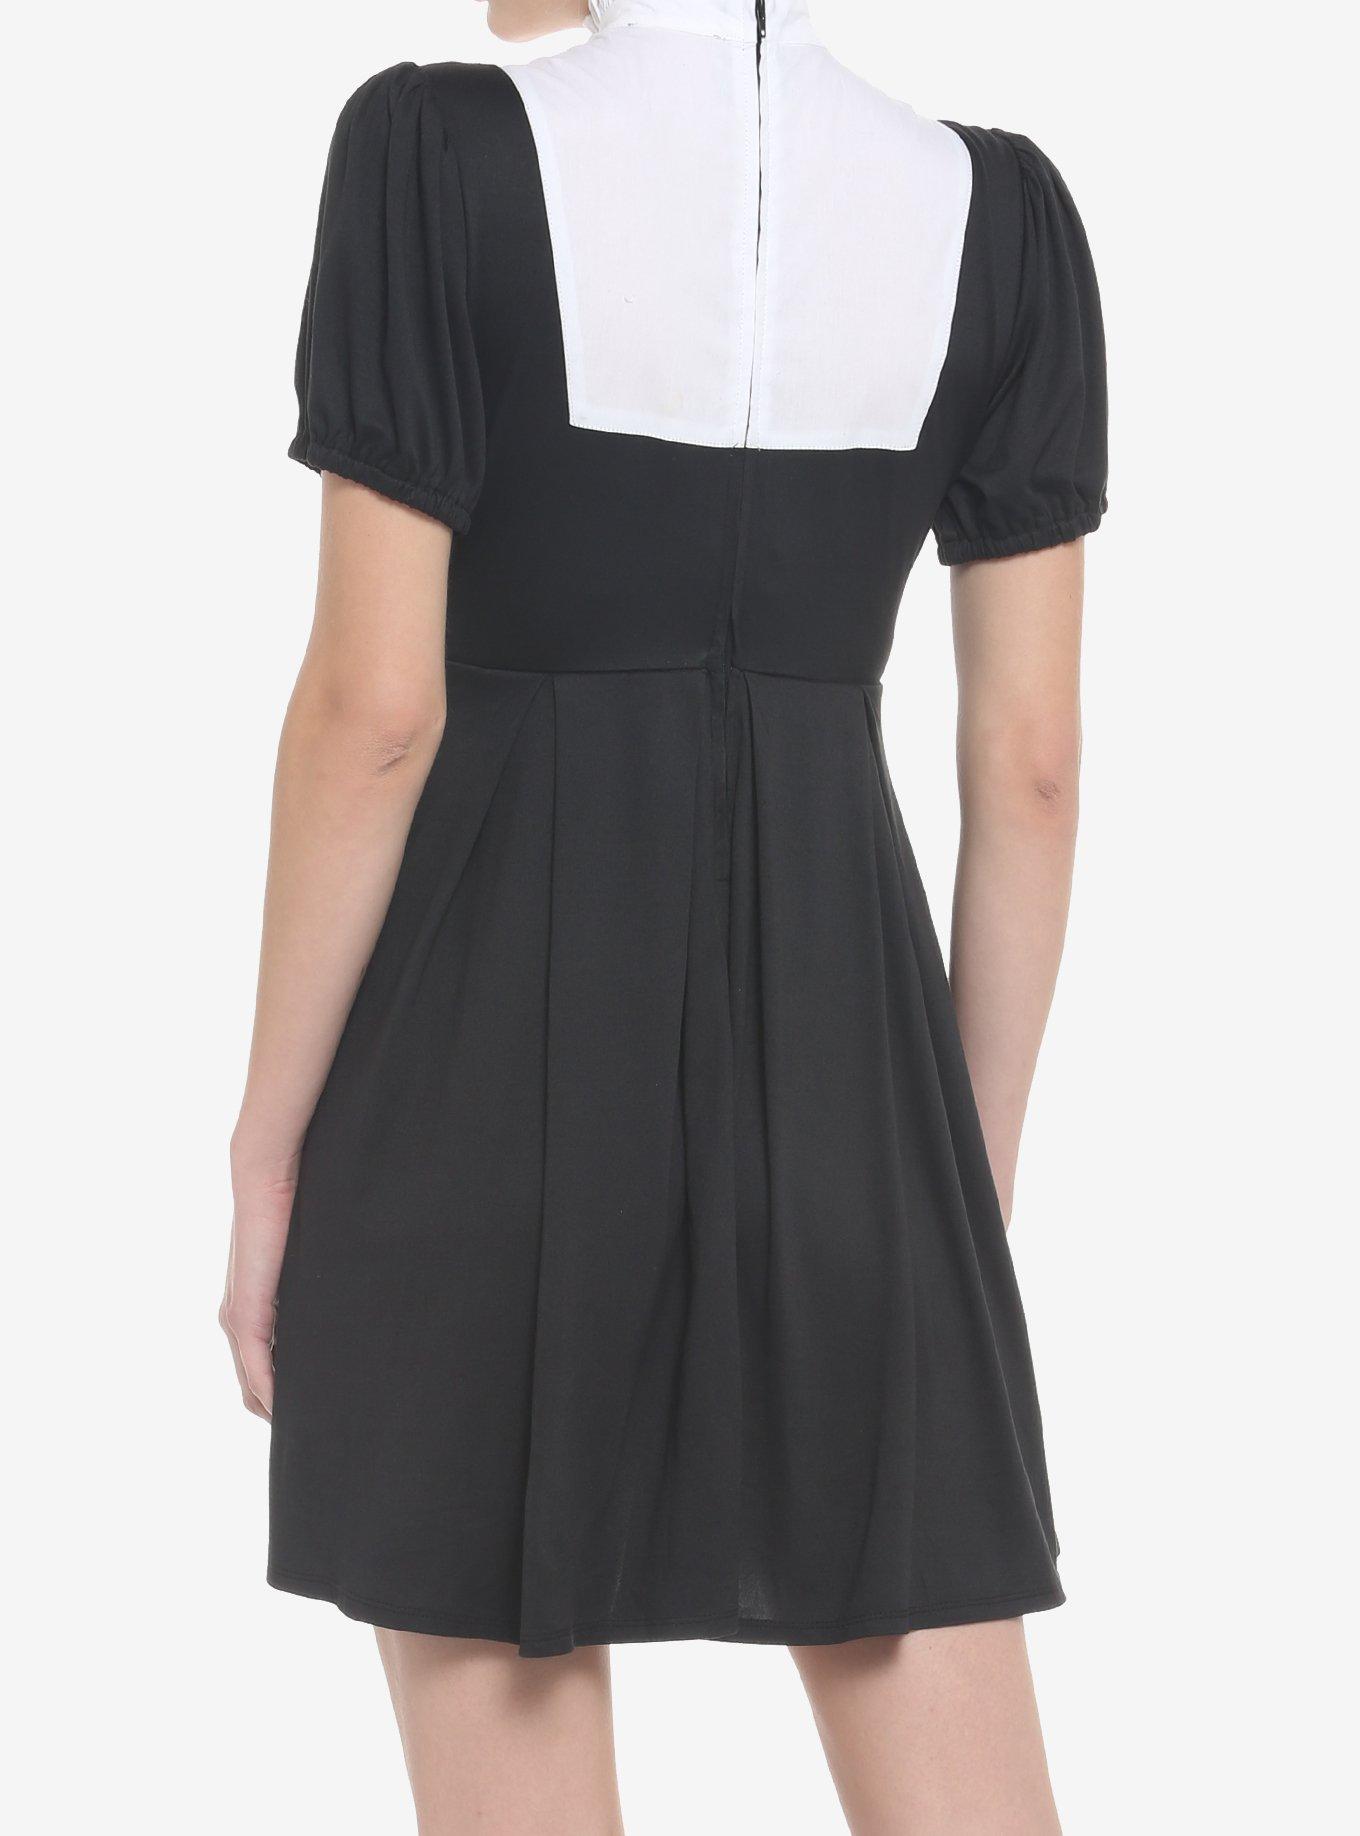 Black Heart Cutout High-Collar Dress, BLACK, alternate